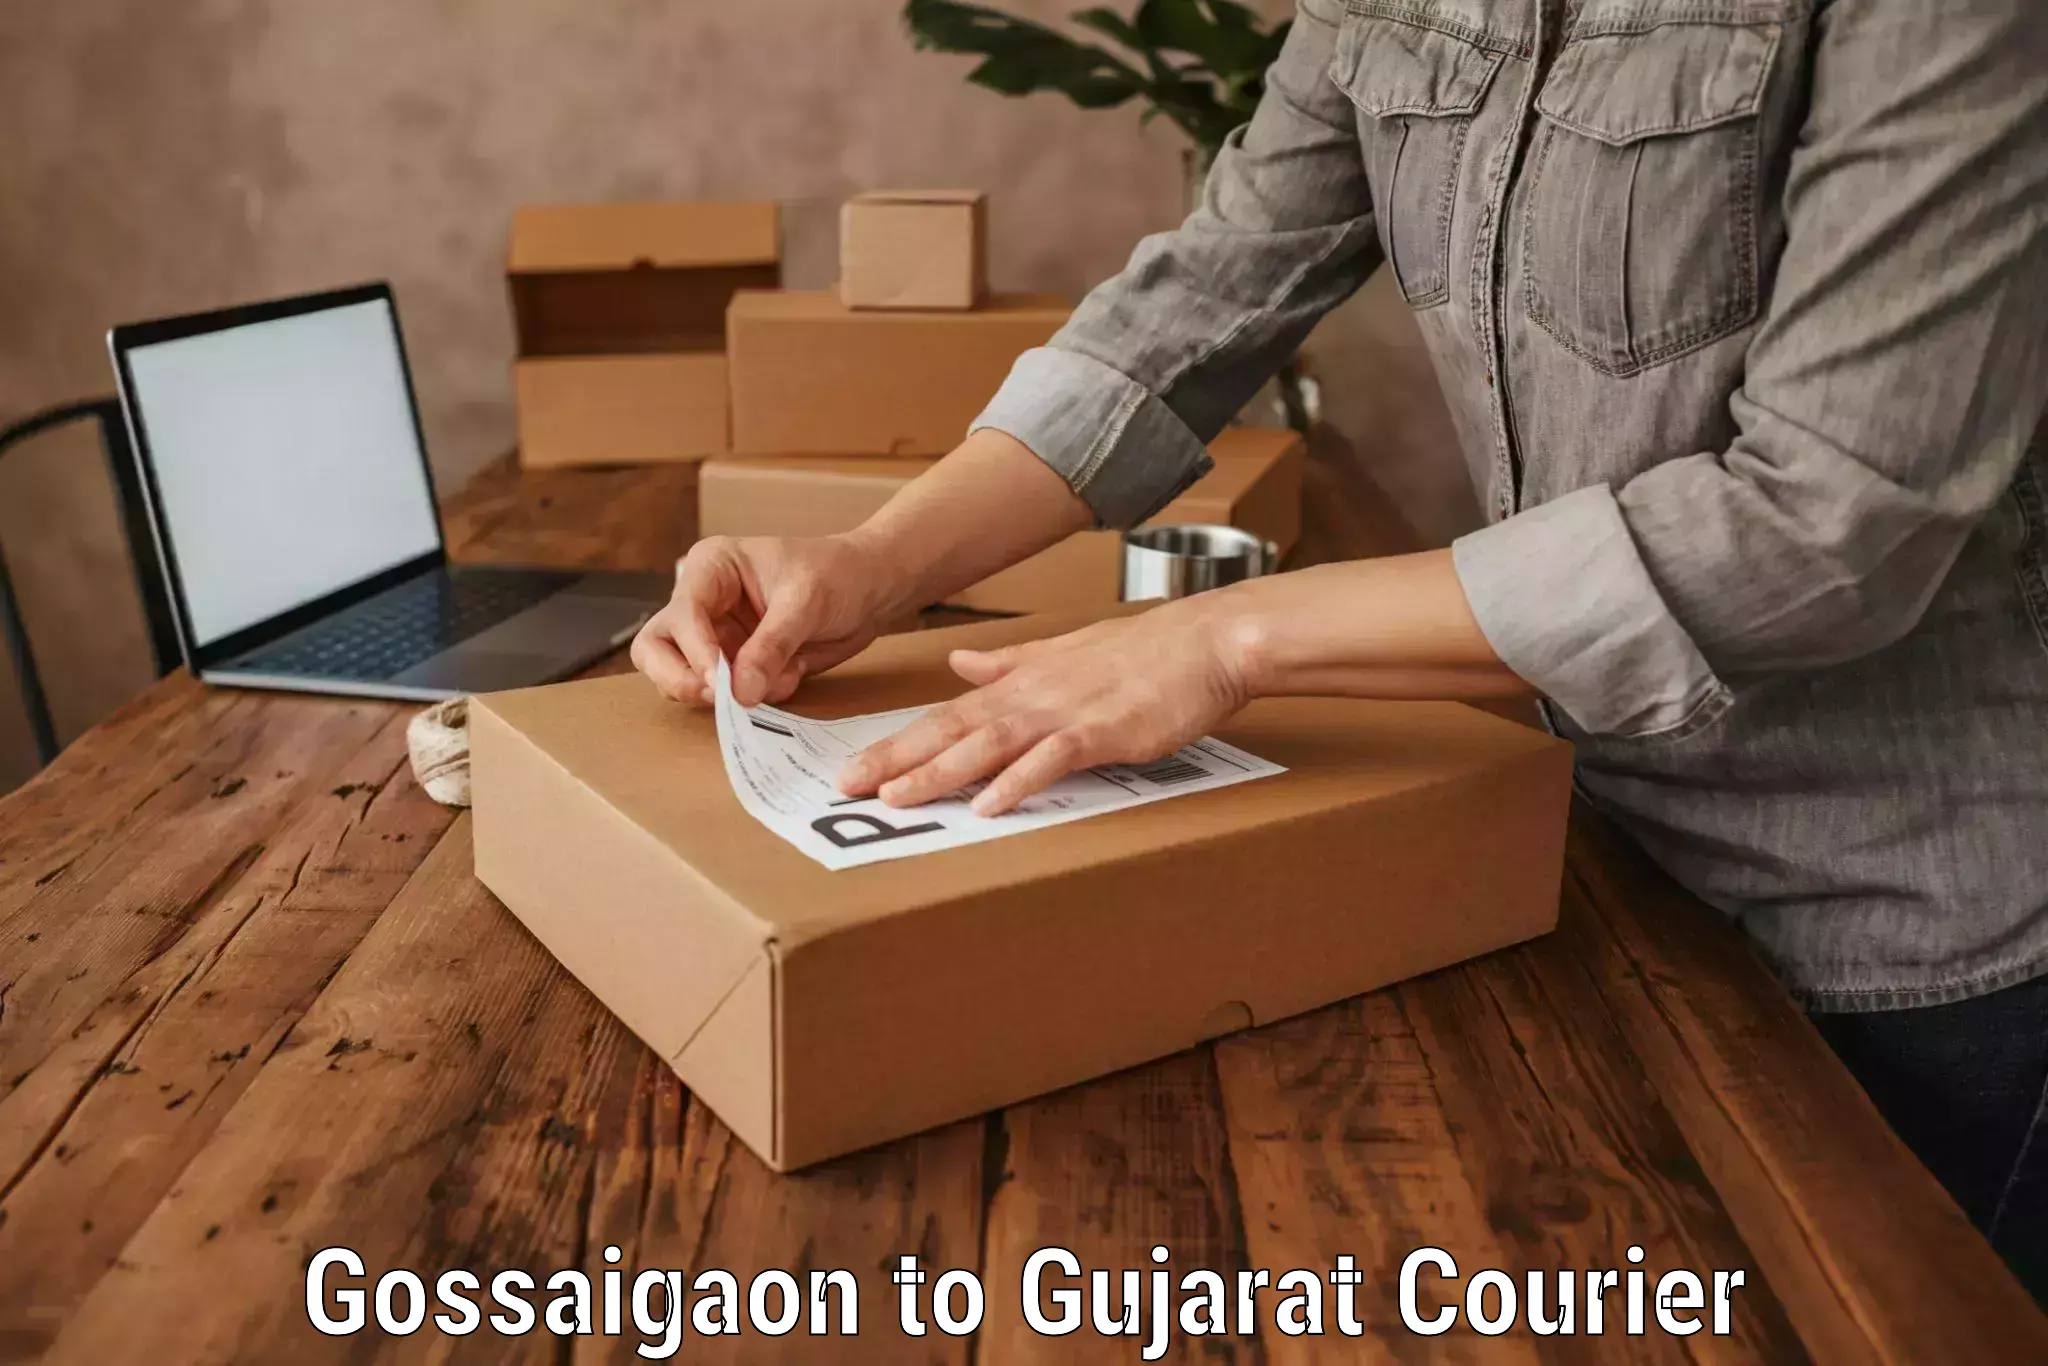 Luggage transport company Gossaigaon to Gujarat